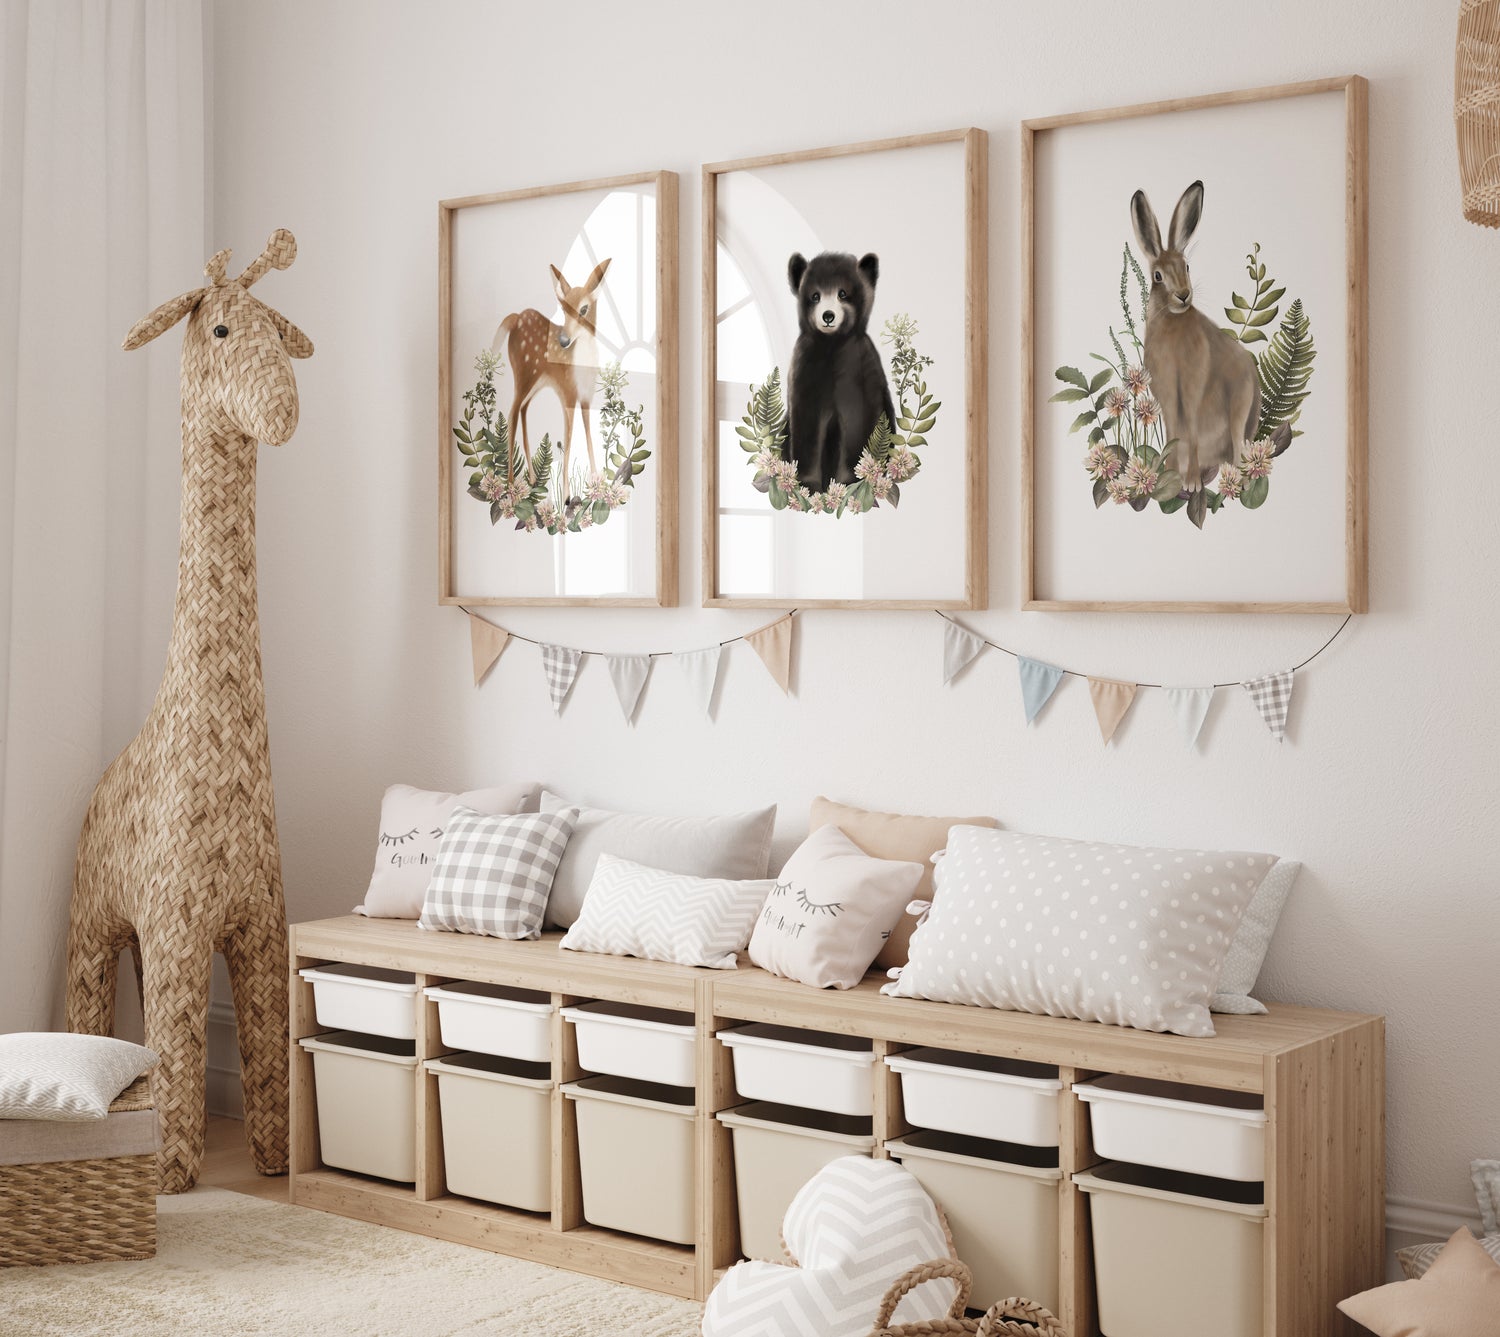 Bramble Friends Art prints shown in frames on wall of kids bedroom - Created by Studio Q - Art by Nicky Quartermaine Scott